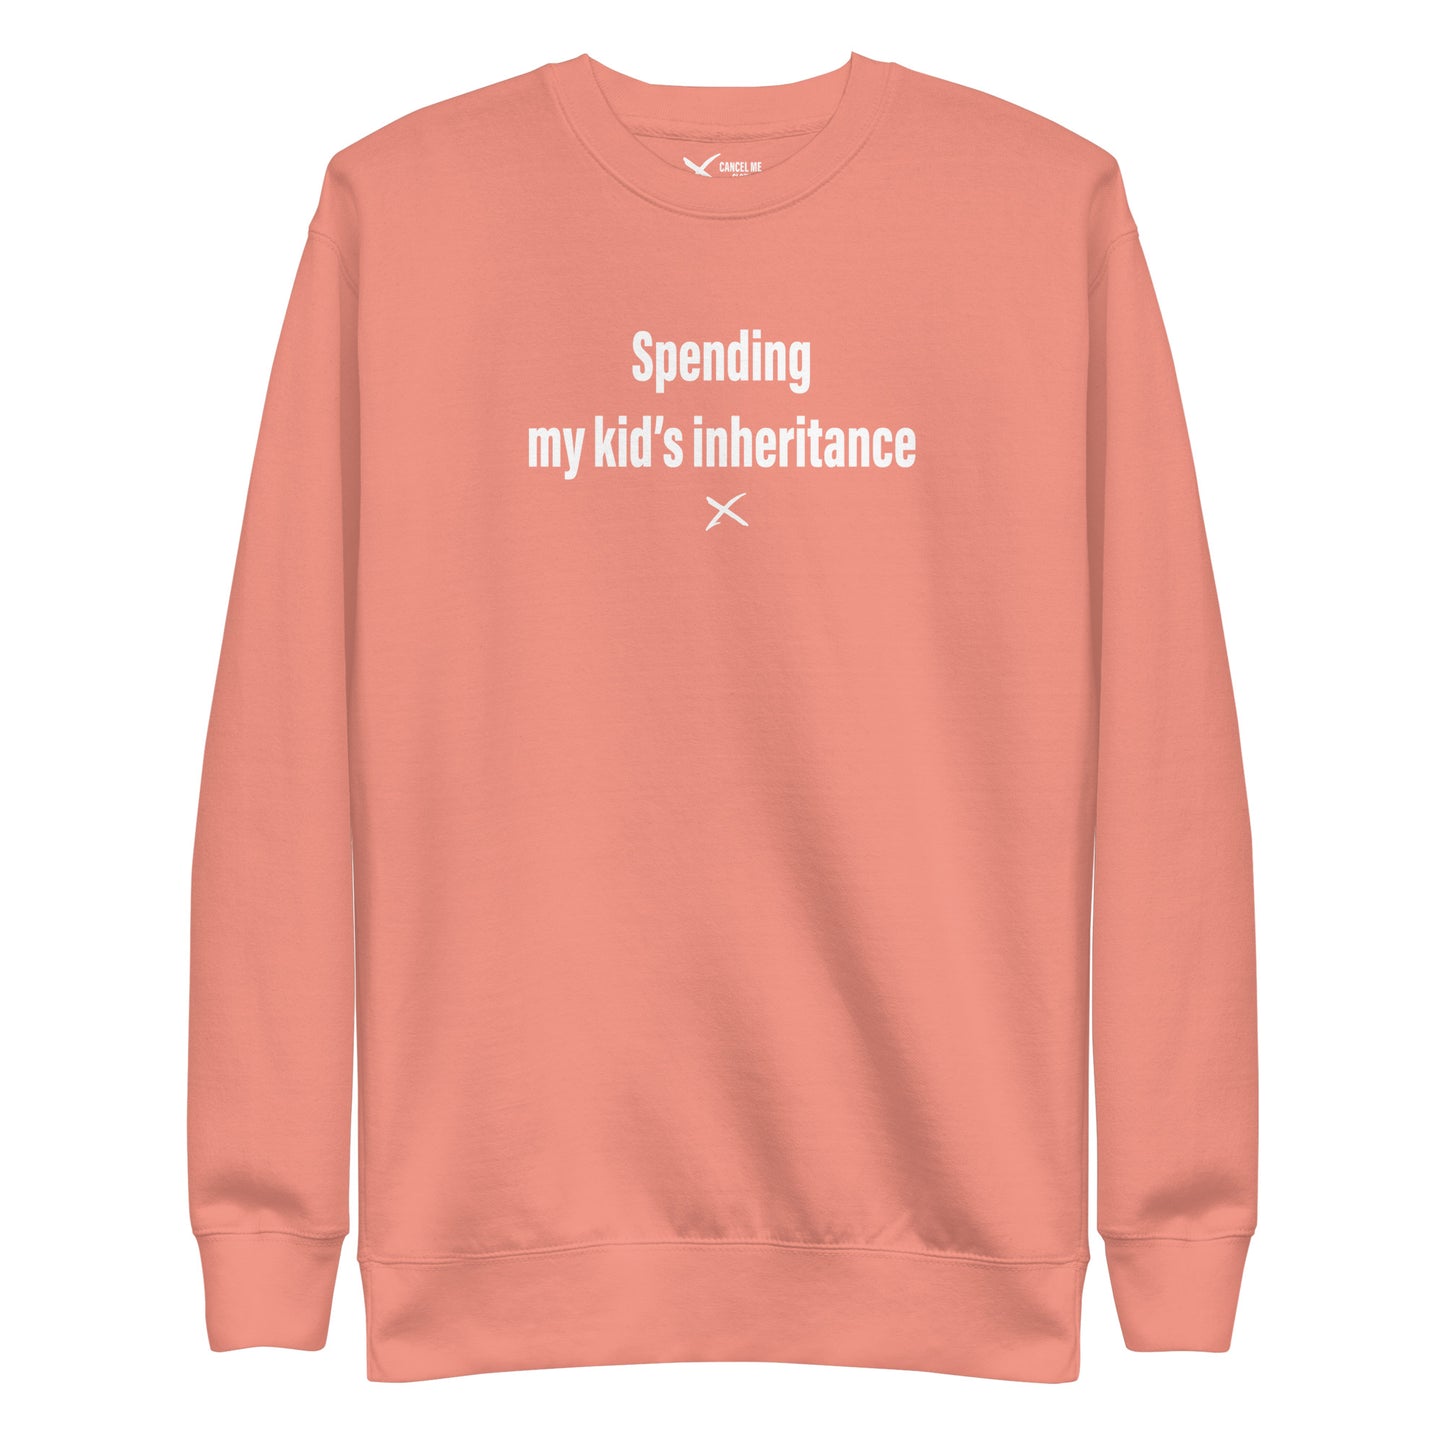 Spending my kid's inheritance - Sweatshirt